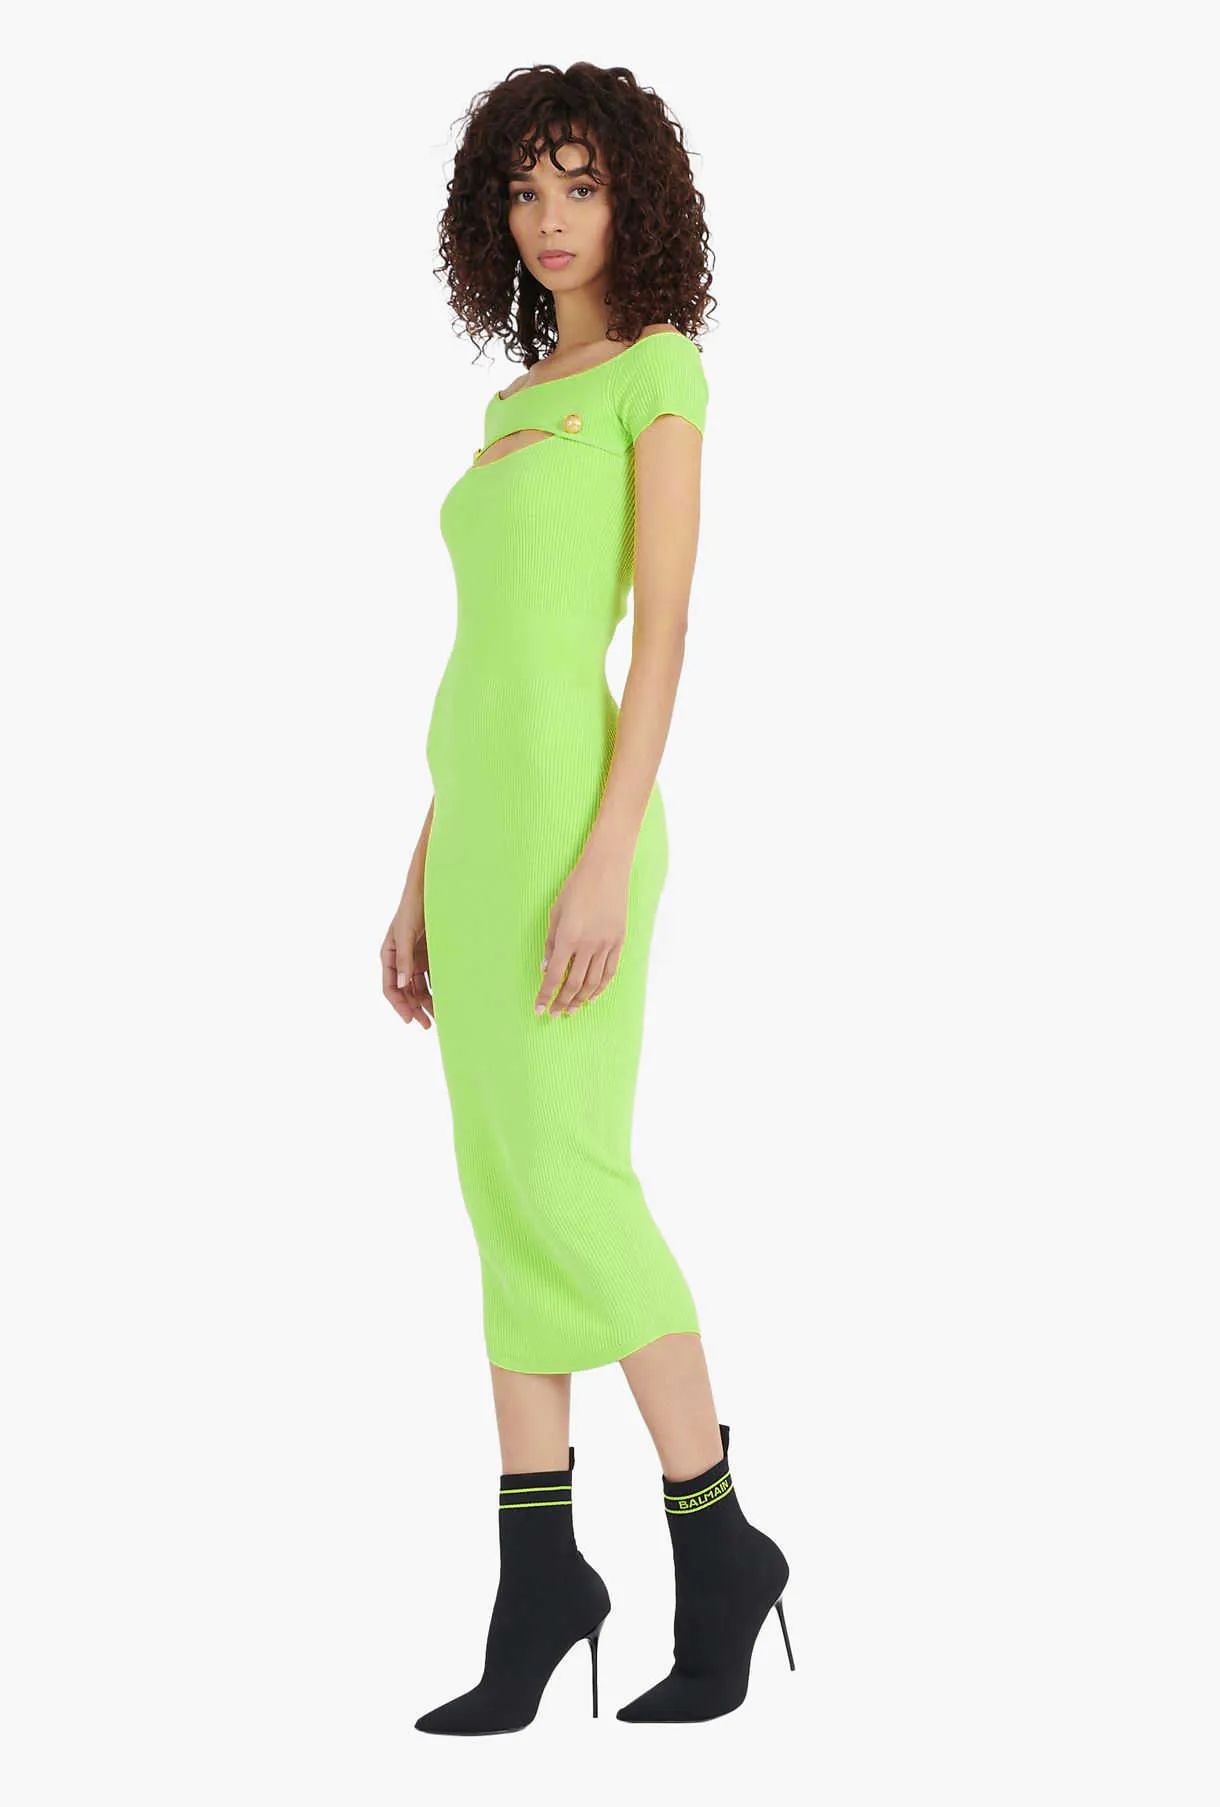 Ocstrade vestido de atadura Chegada neon verde bodycon mulheres verão sexy corte outfits midi party clube 210527